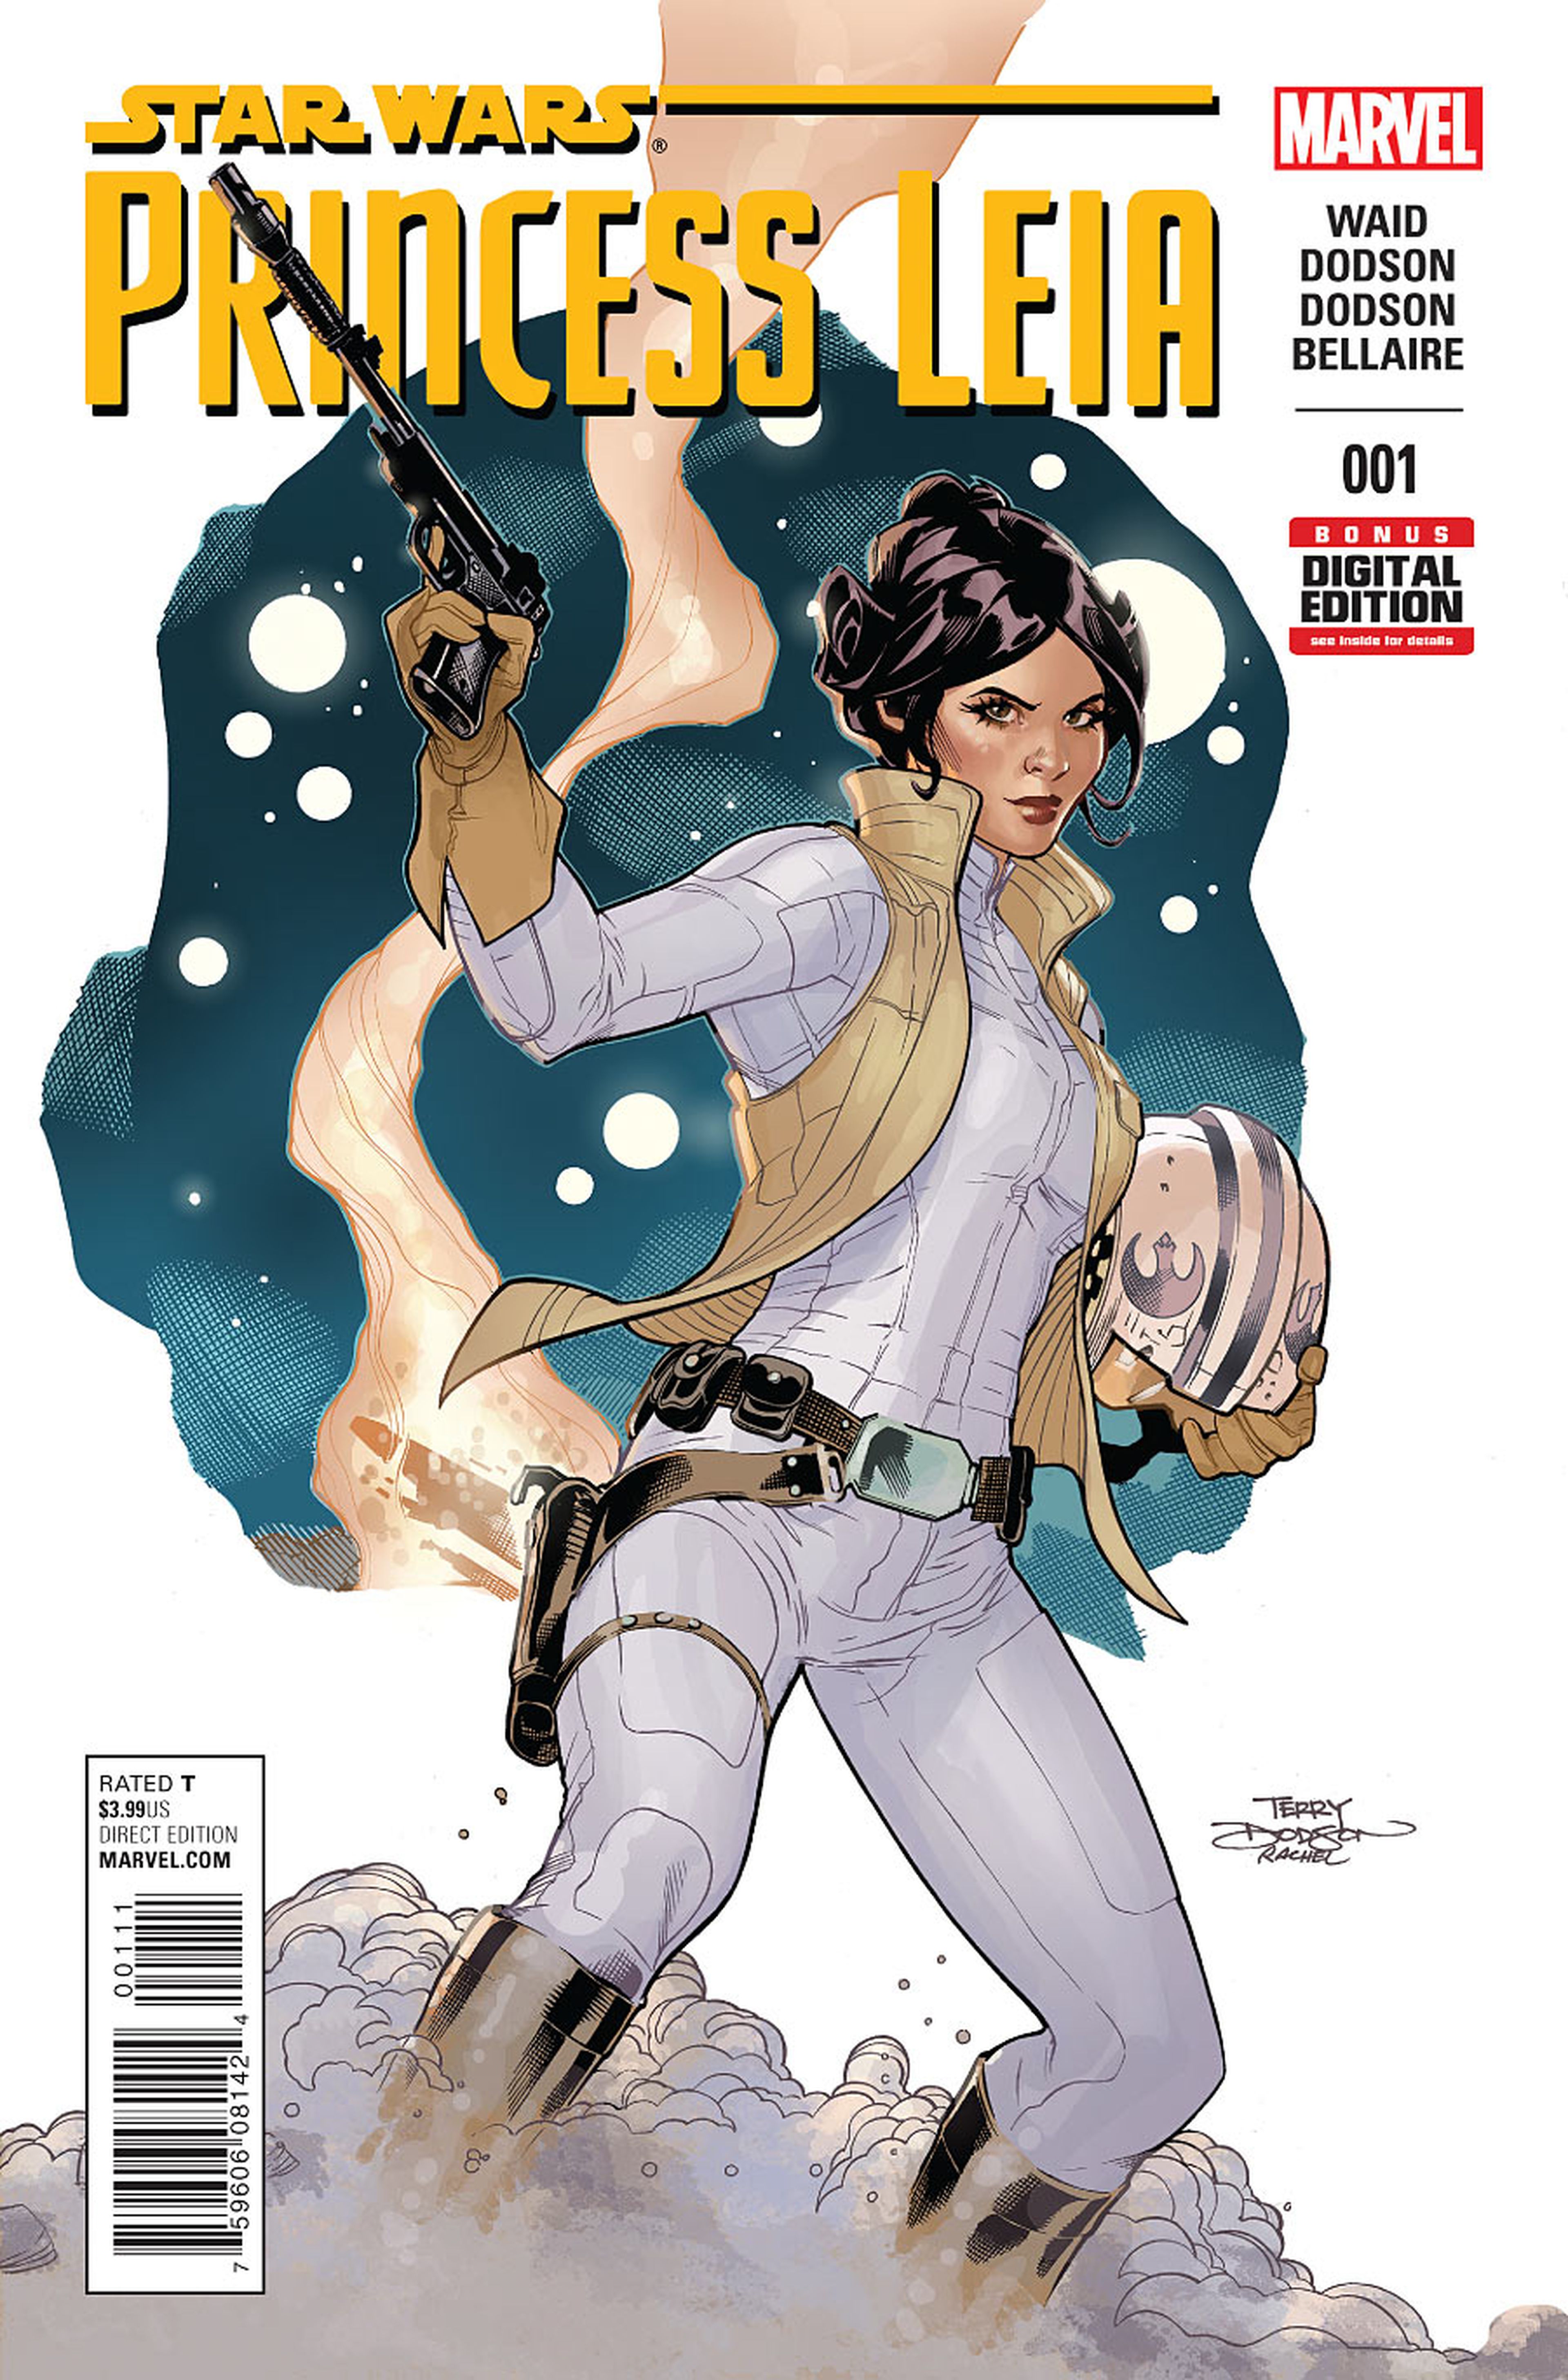 Star Wars Princesa Leia: Avance del cómic